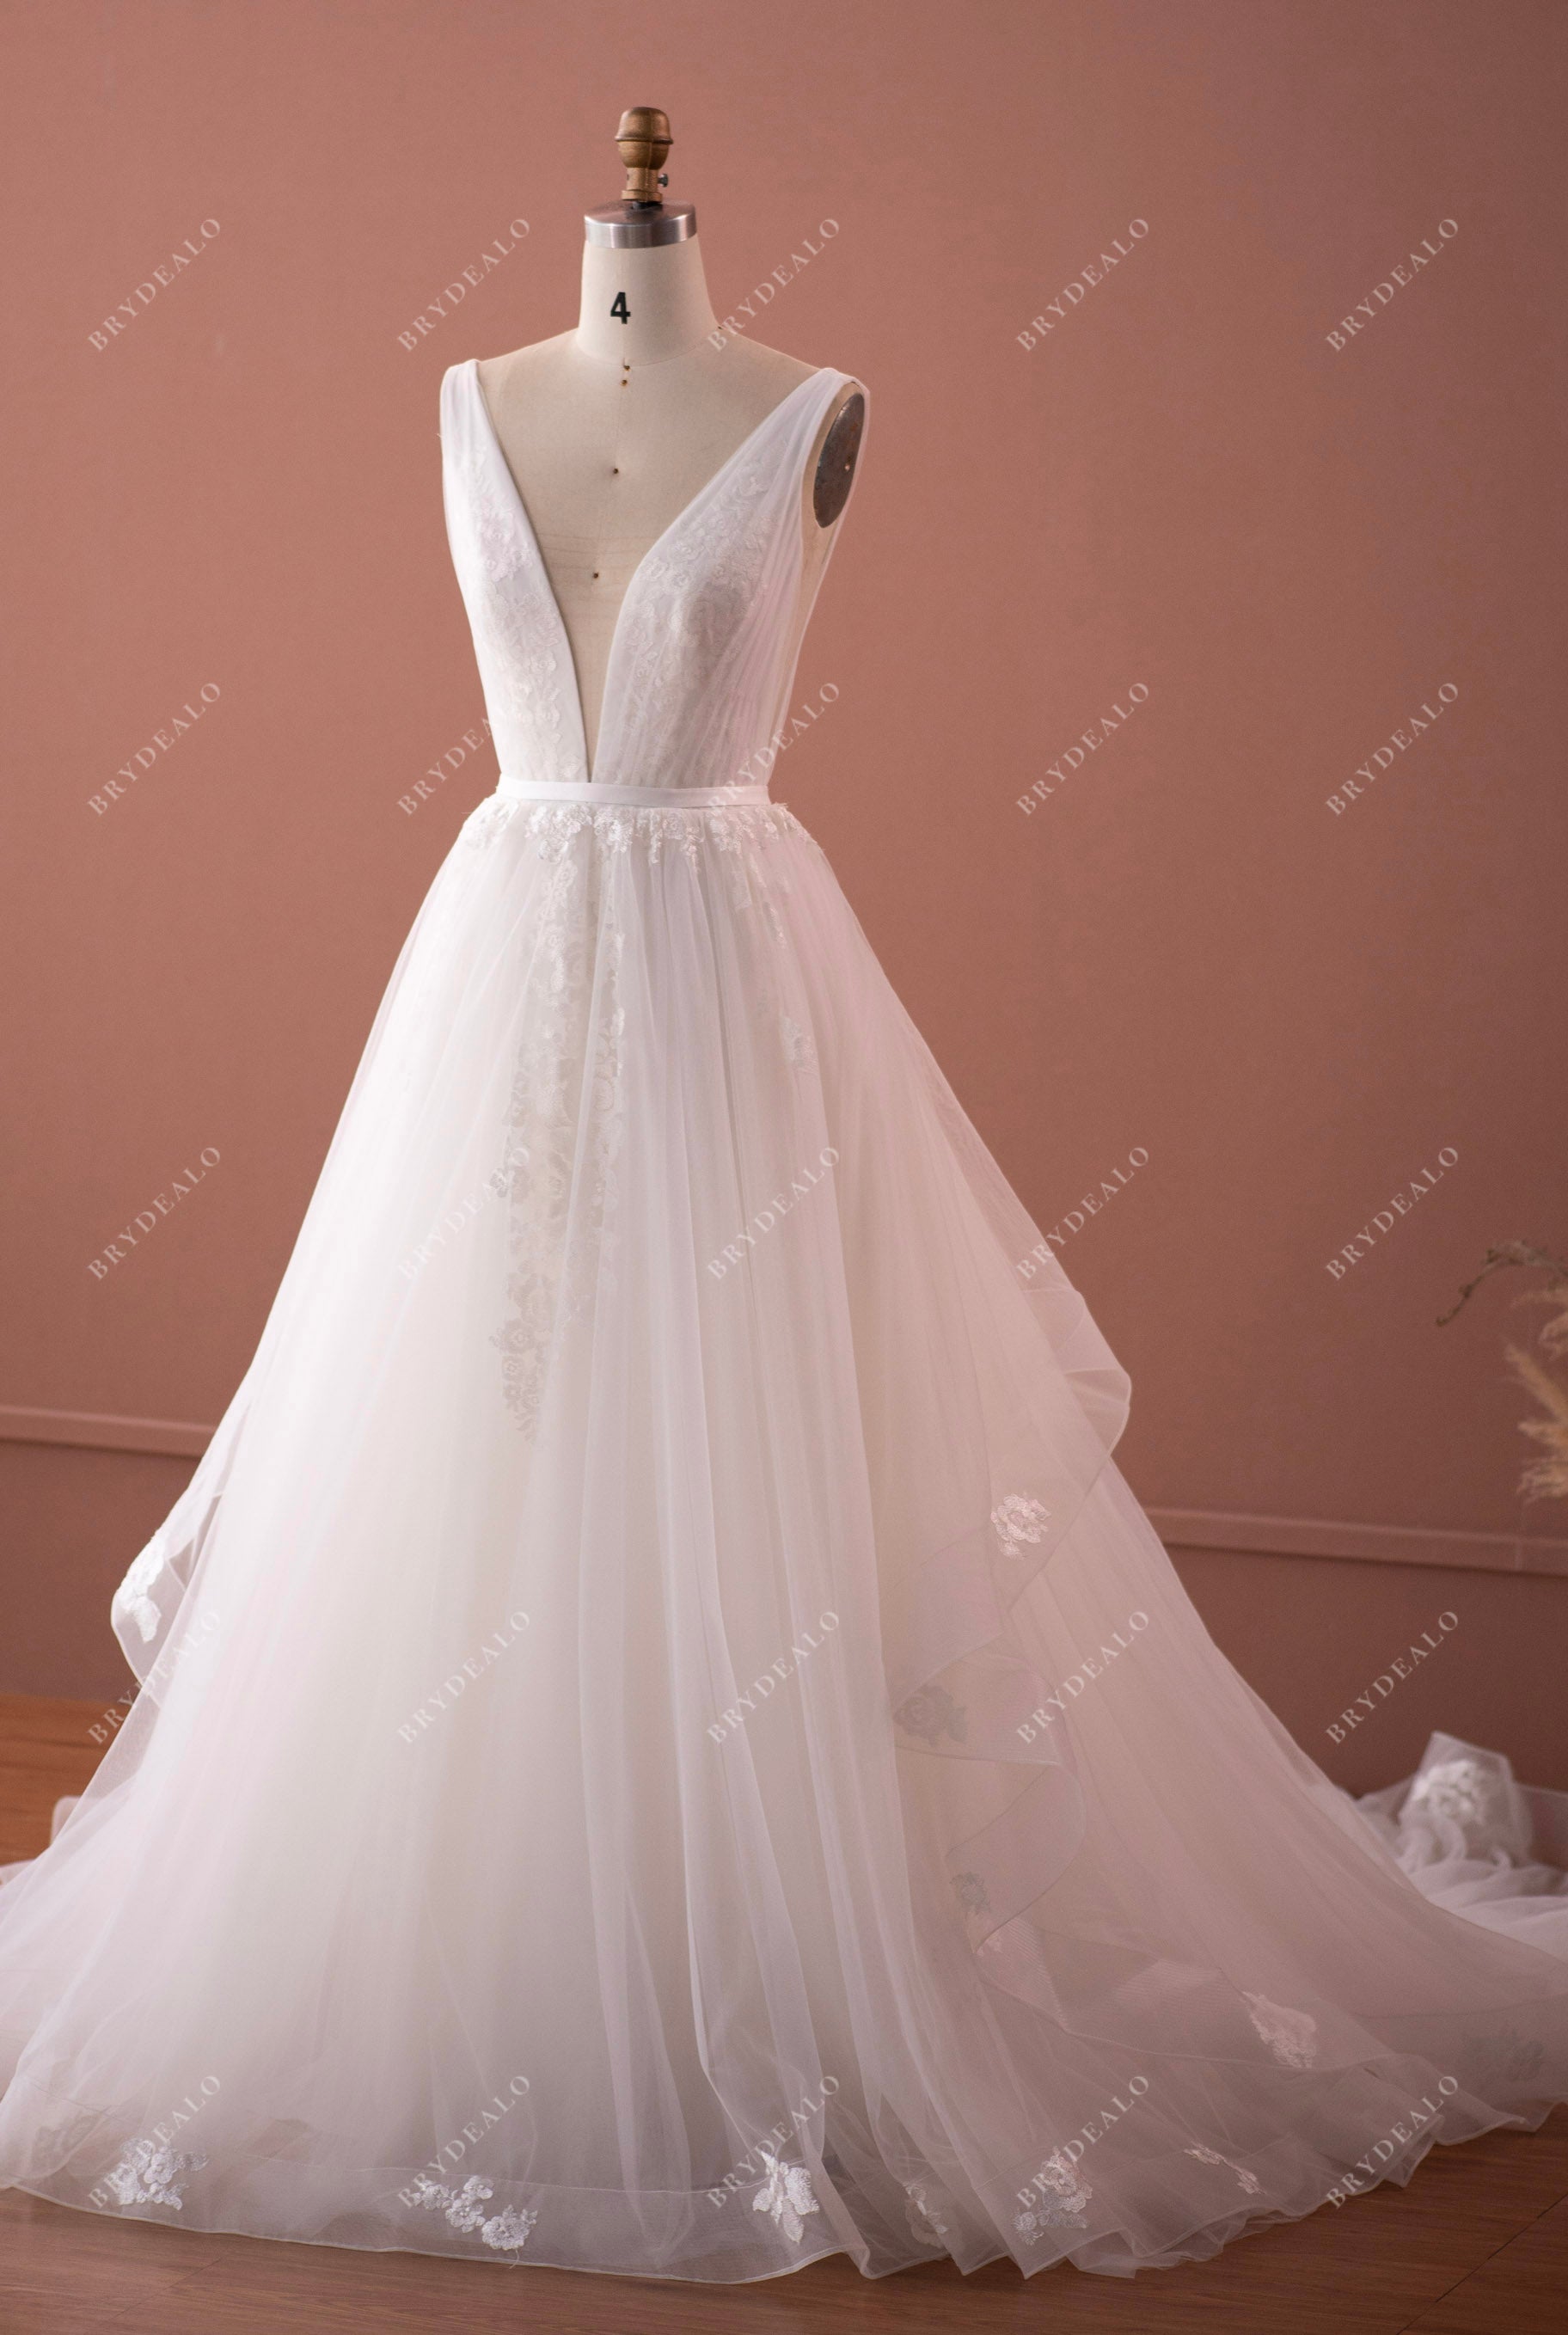 Floral Lace V-back 2-tier Long Train Bridal Wedding Dress